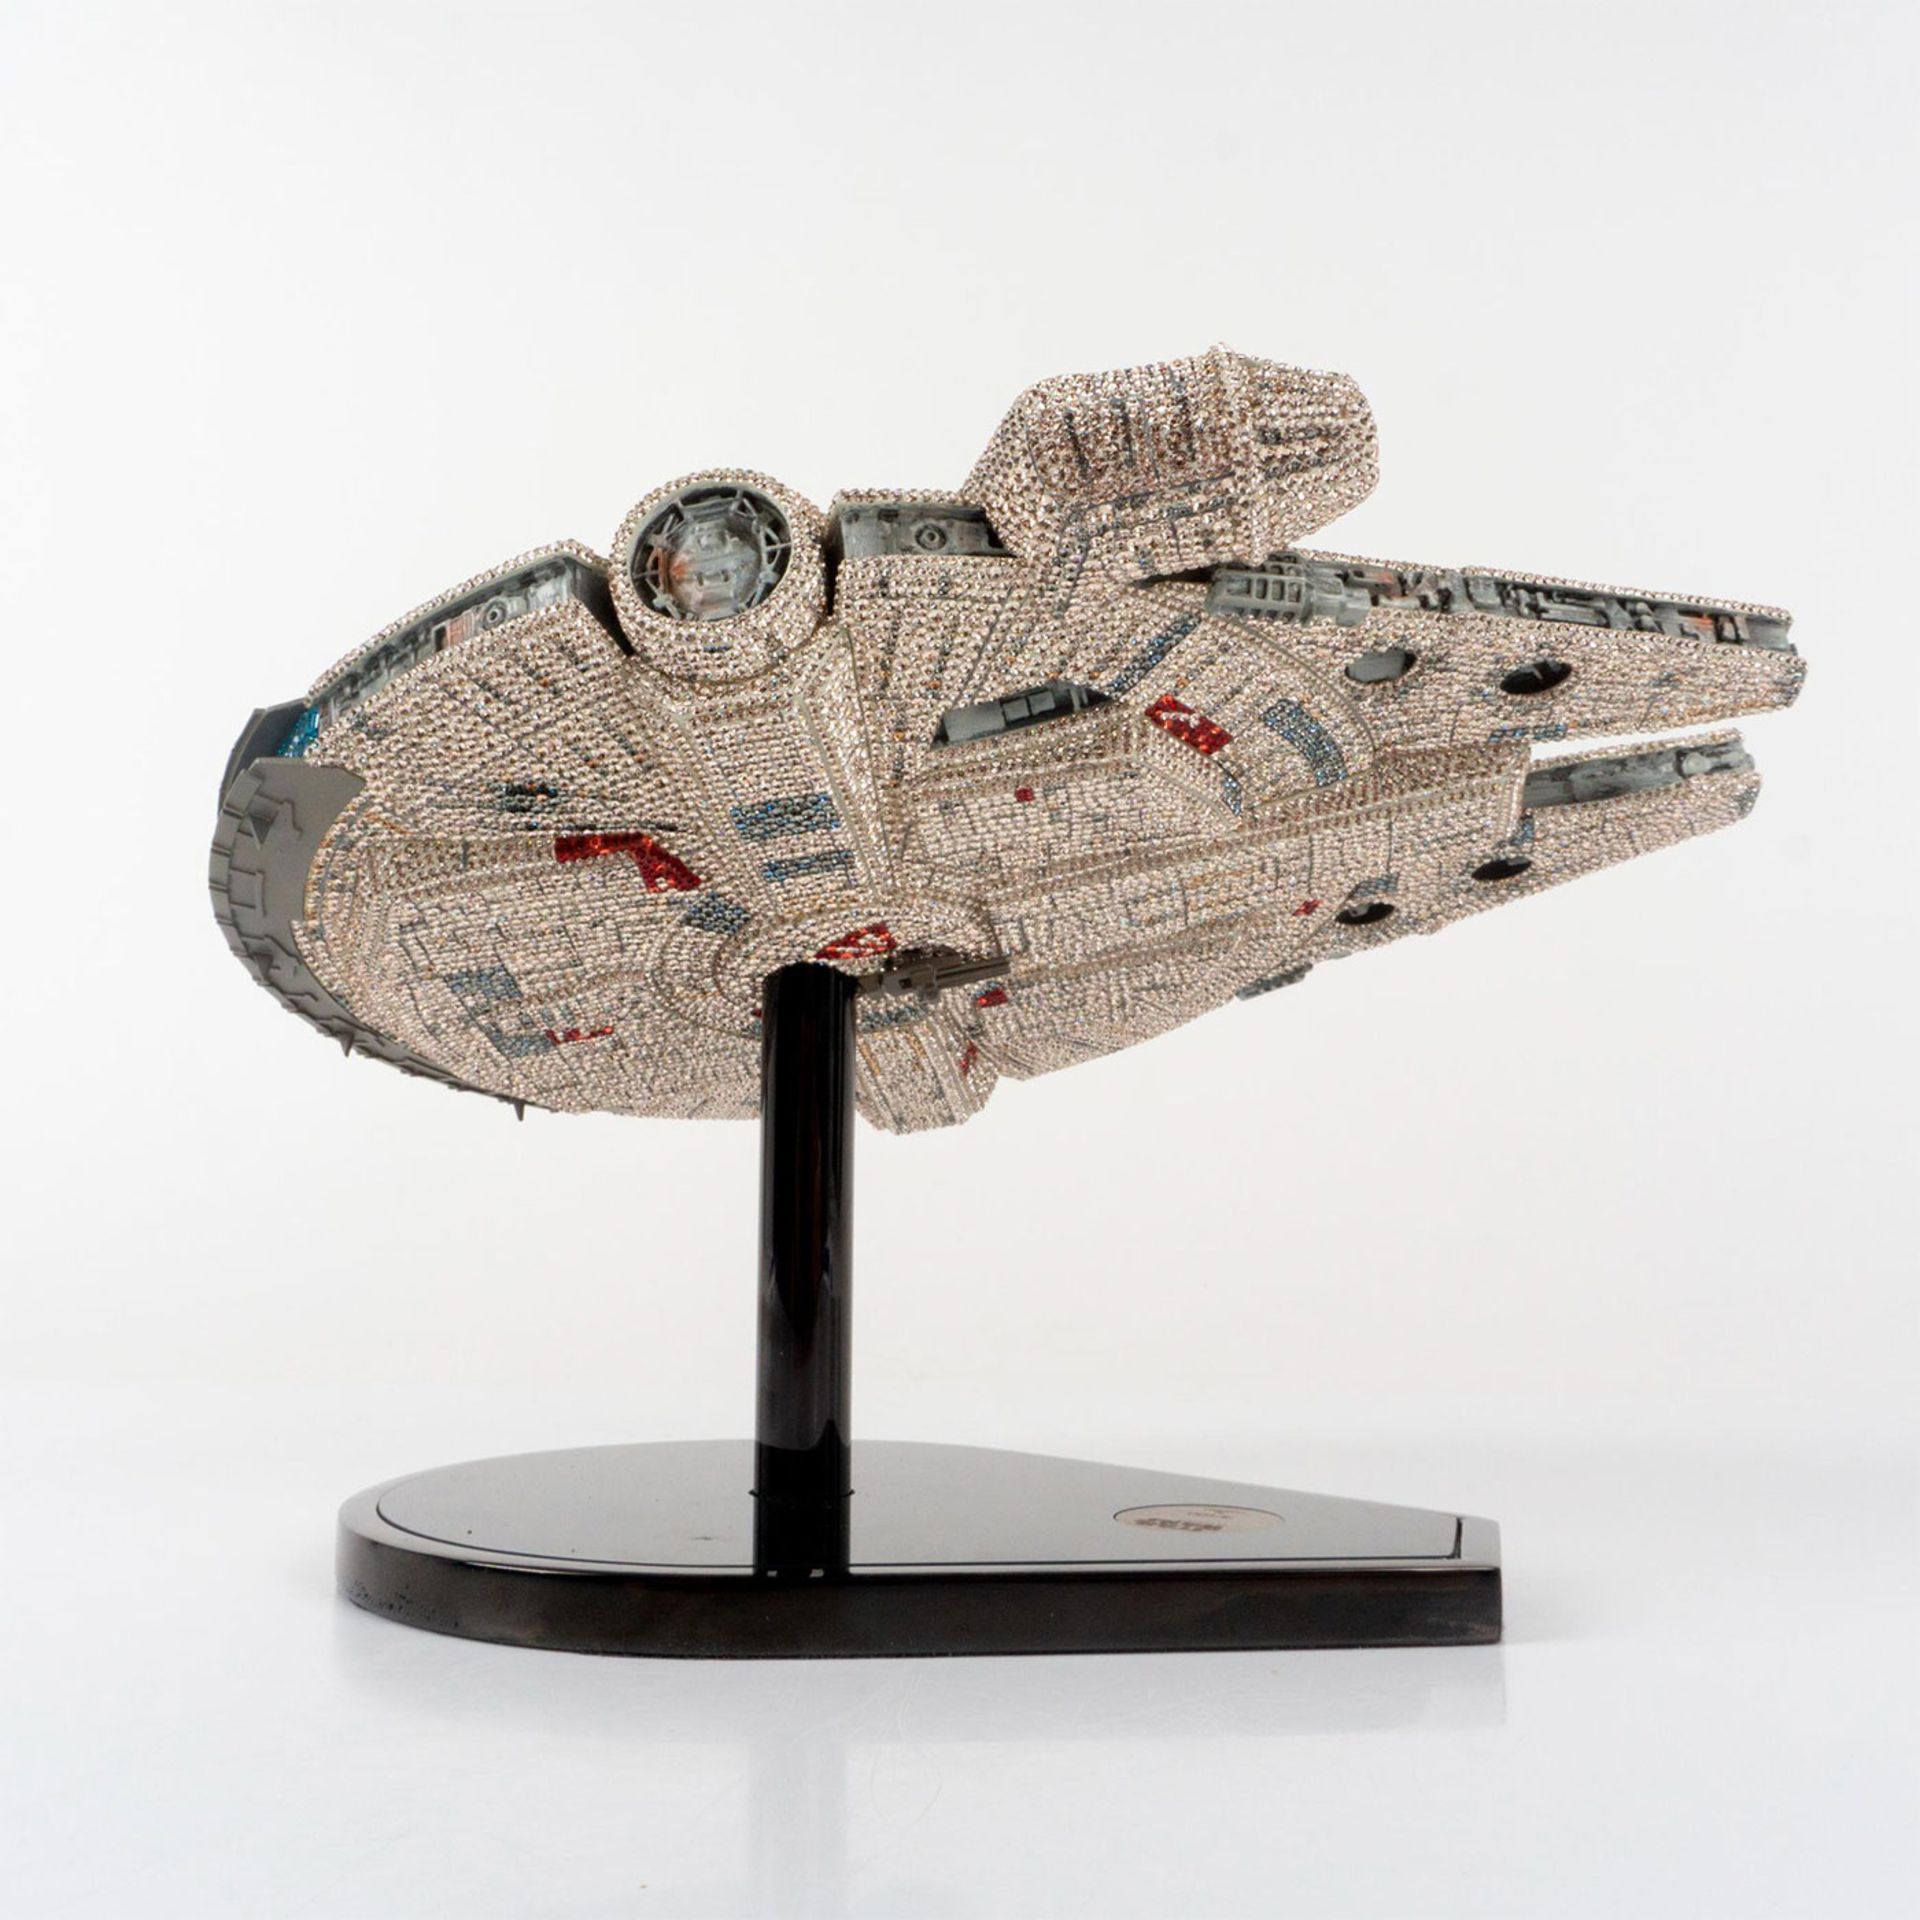 Swarovski Crystal Sculpture, Star Wars Millennium Falcon - Image 8 of 8